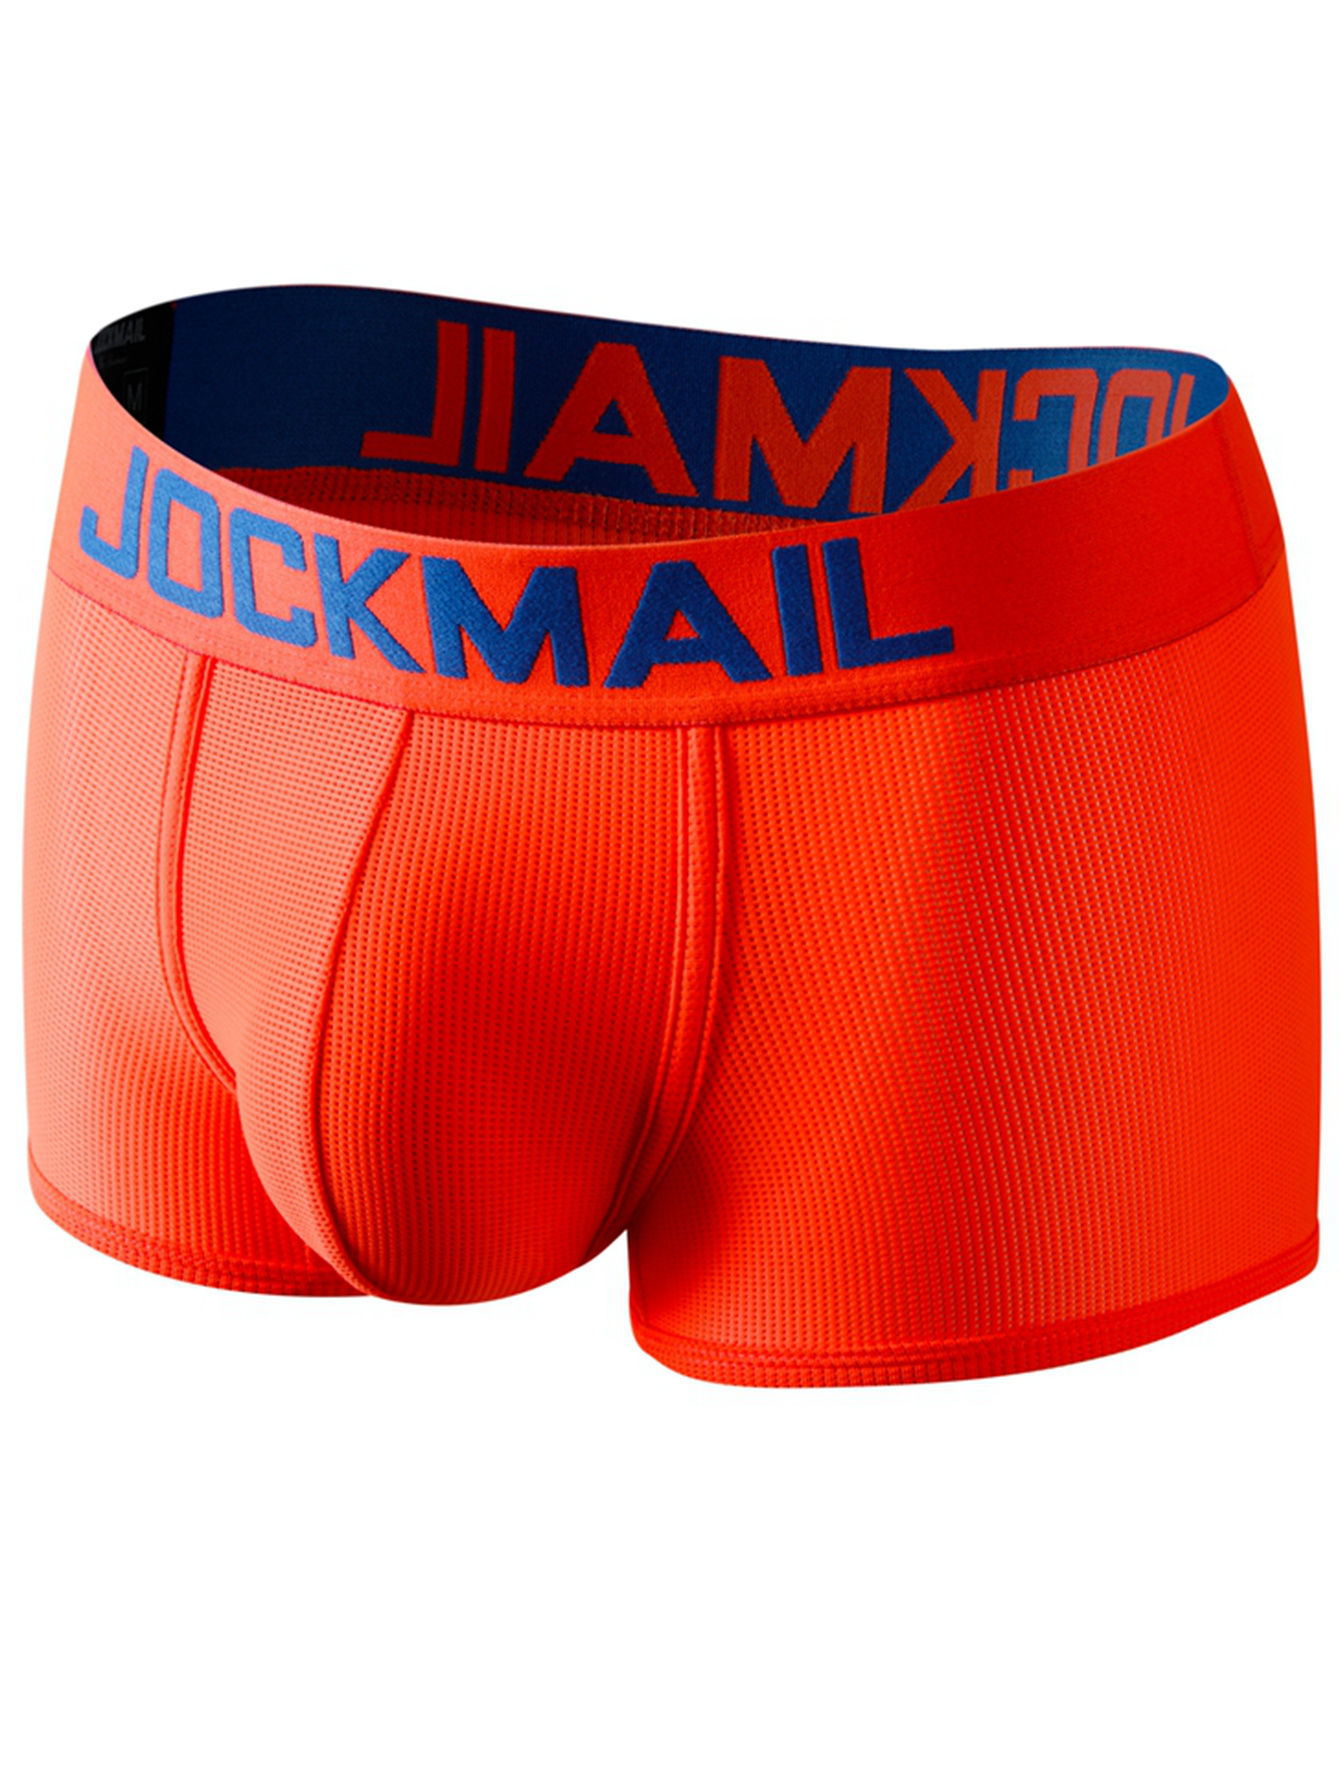 4pcs JOCKMAIL Men's Fashion Sexy Neon Low Waist Mesh Breathable Men's  Underwear Summer Microfiber Quick Dry Boxer Briefs Sports Gym Shorts  Elasticated